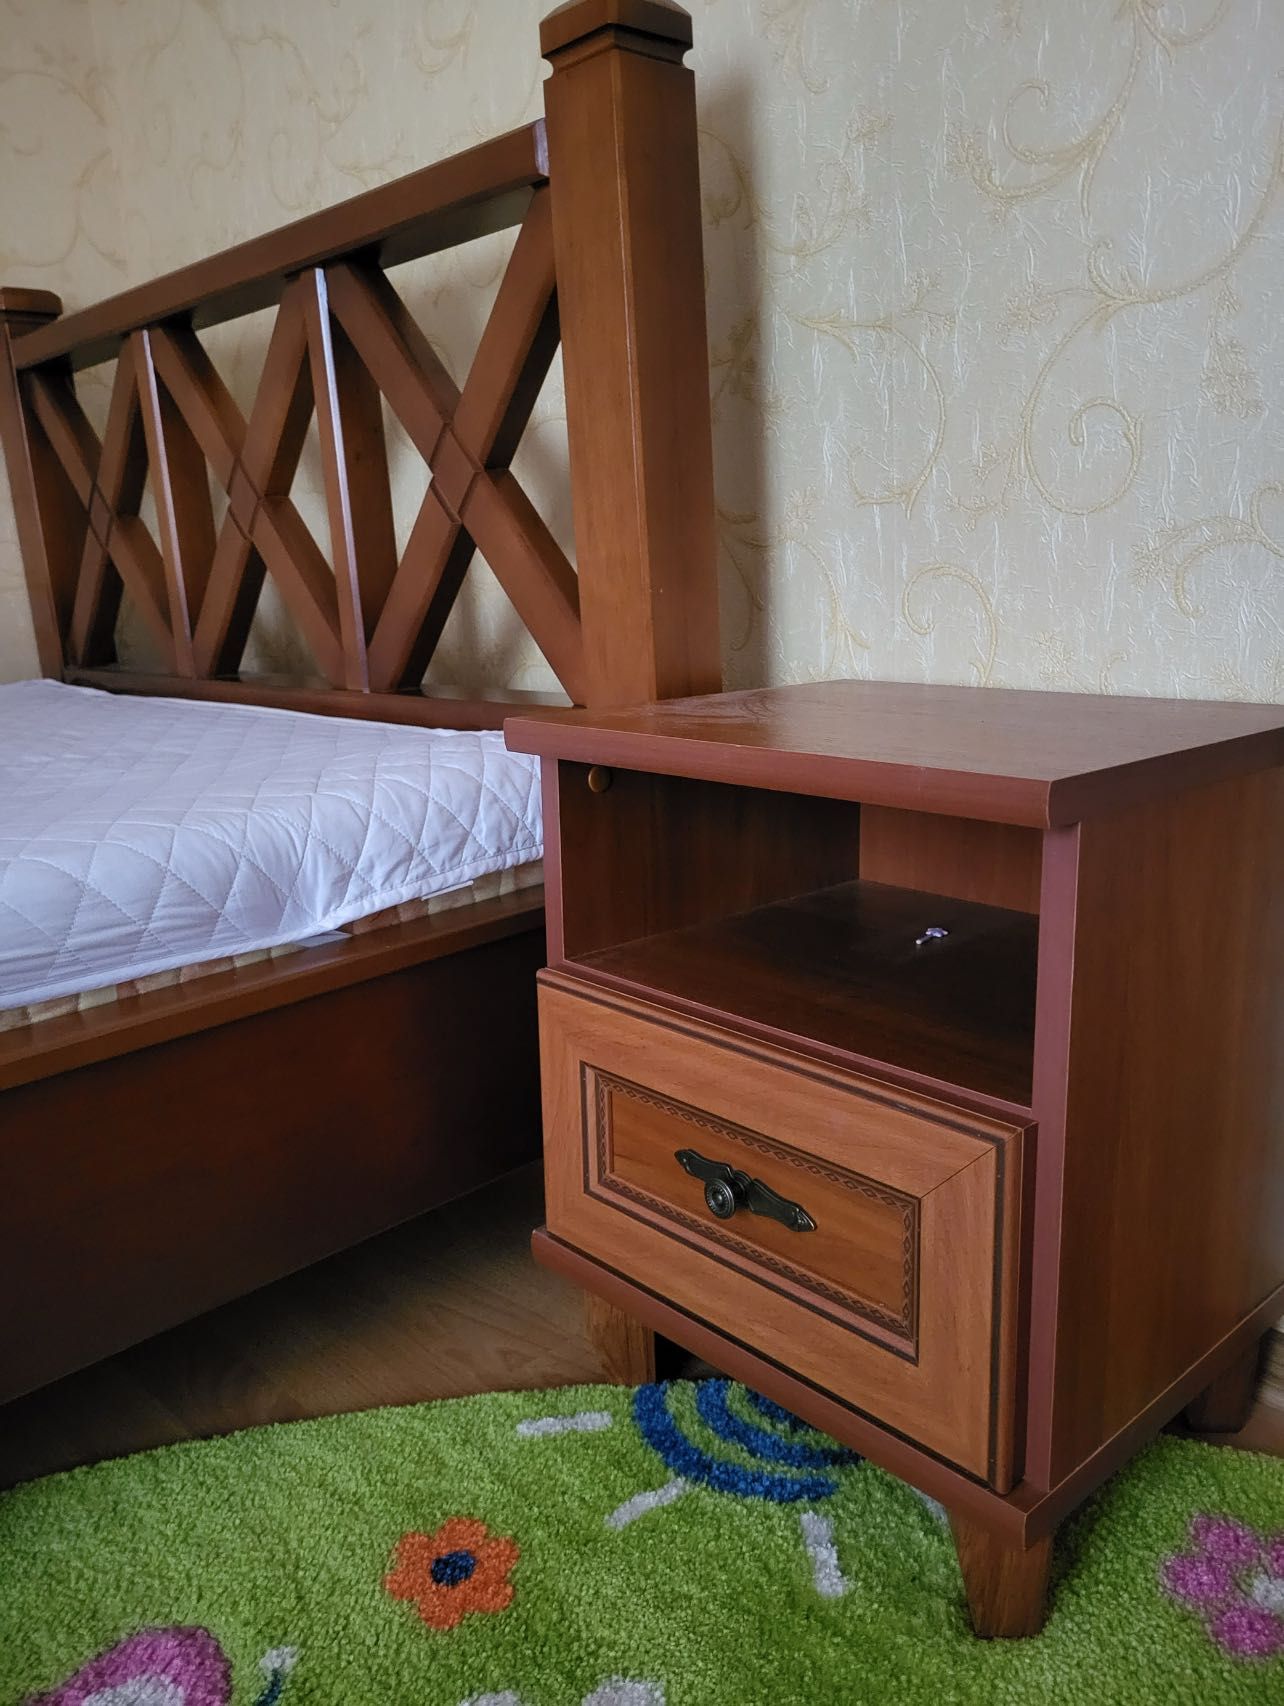 Спальня натуральне дерево ліжко матрац двоспальне тумбочка тумба Польщ